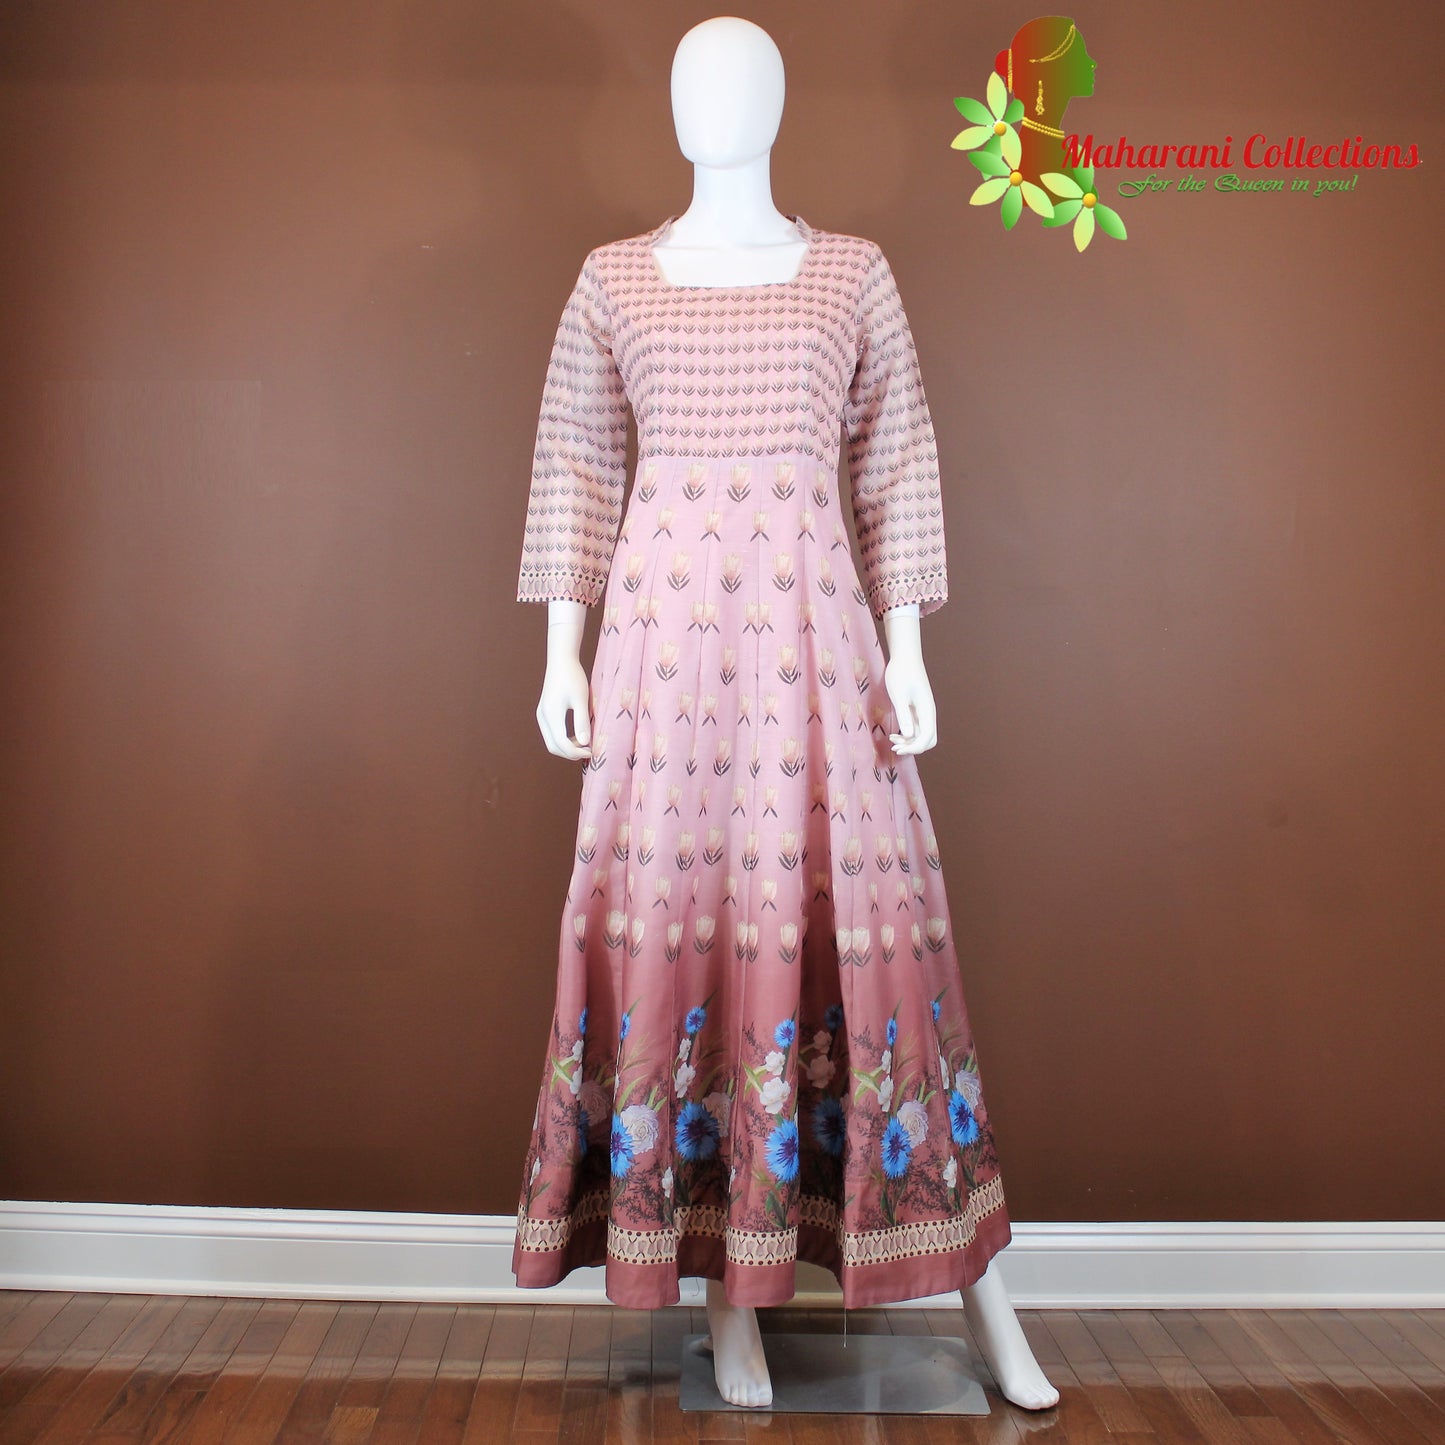 Maharani's Designer Gala Gown - Peach (L) - Silk